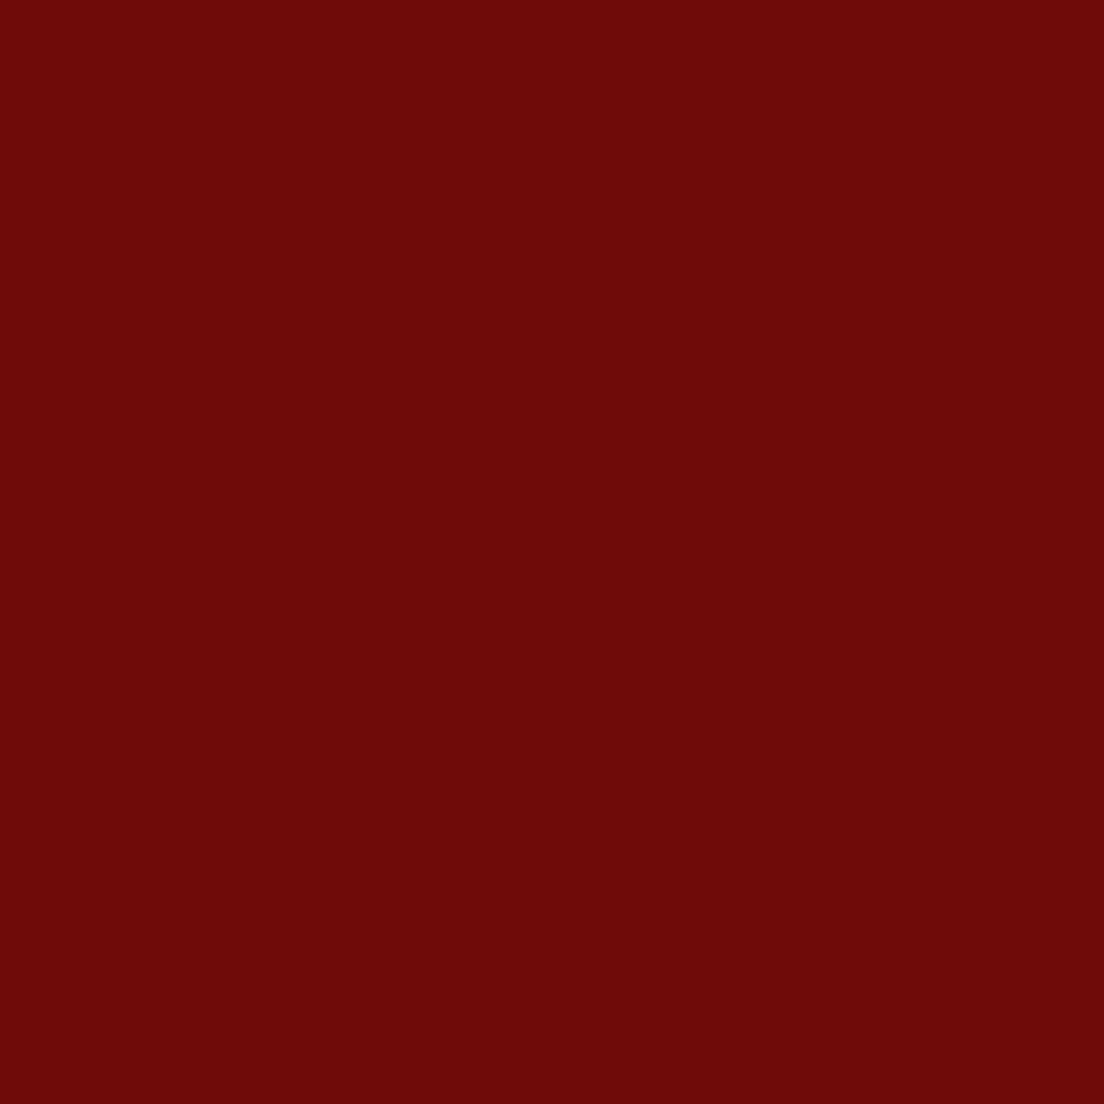 Schuhbutler shoe cabinet decor: Burgundy red